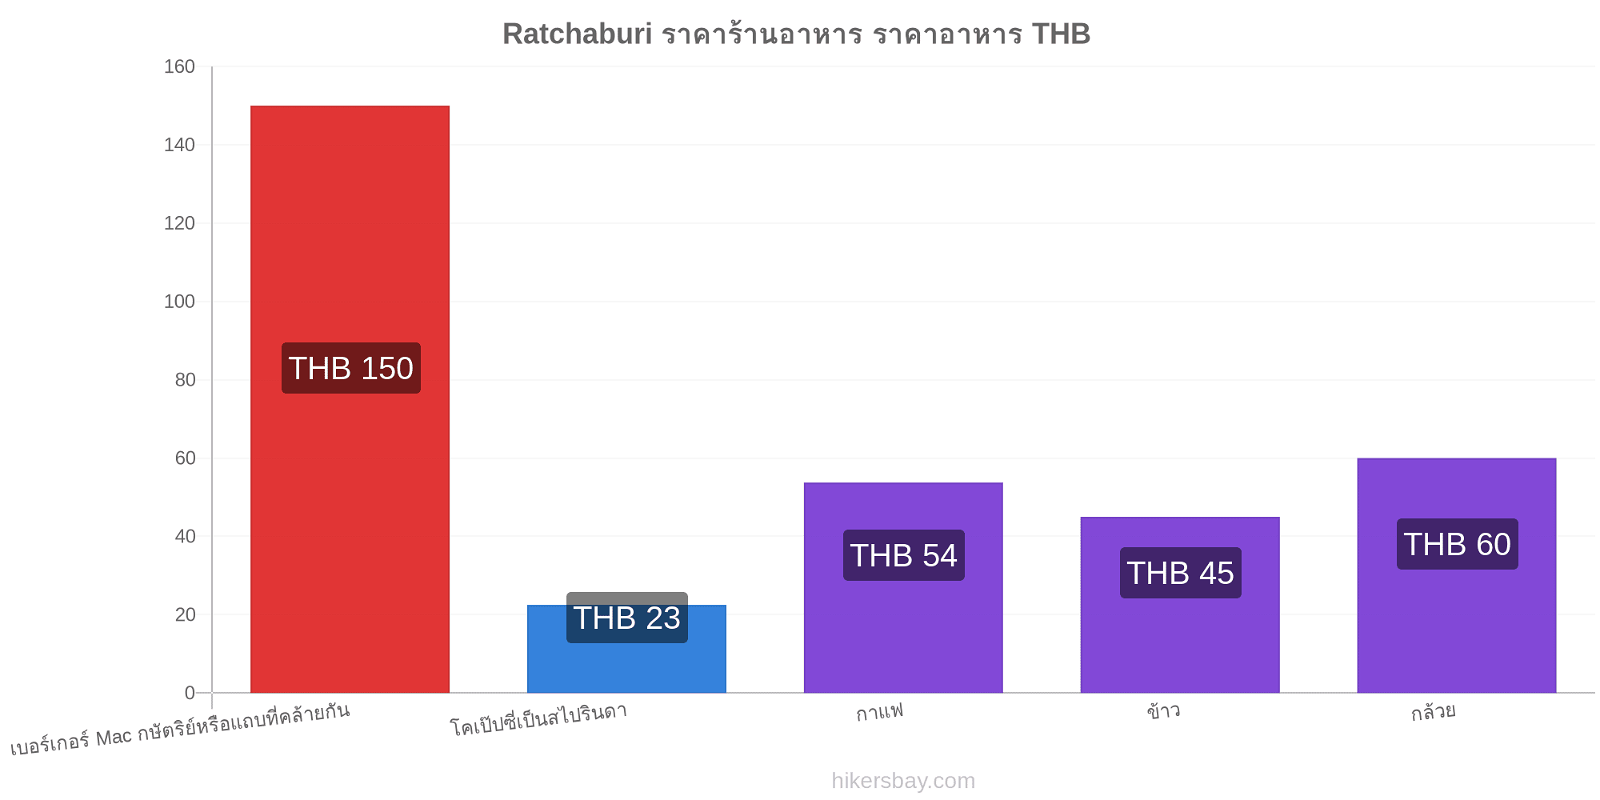 Ratchaburi การเปลี่ยนแปลงราคา hikersbay.com